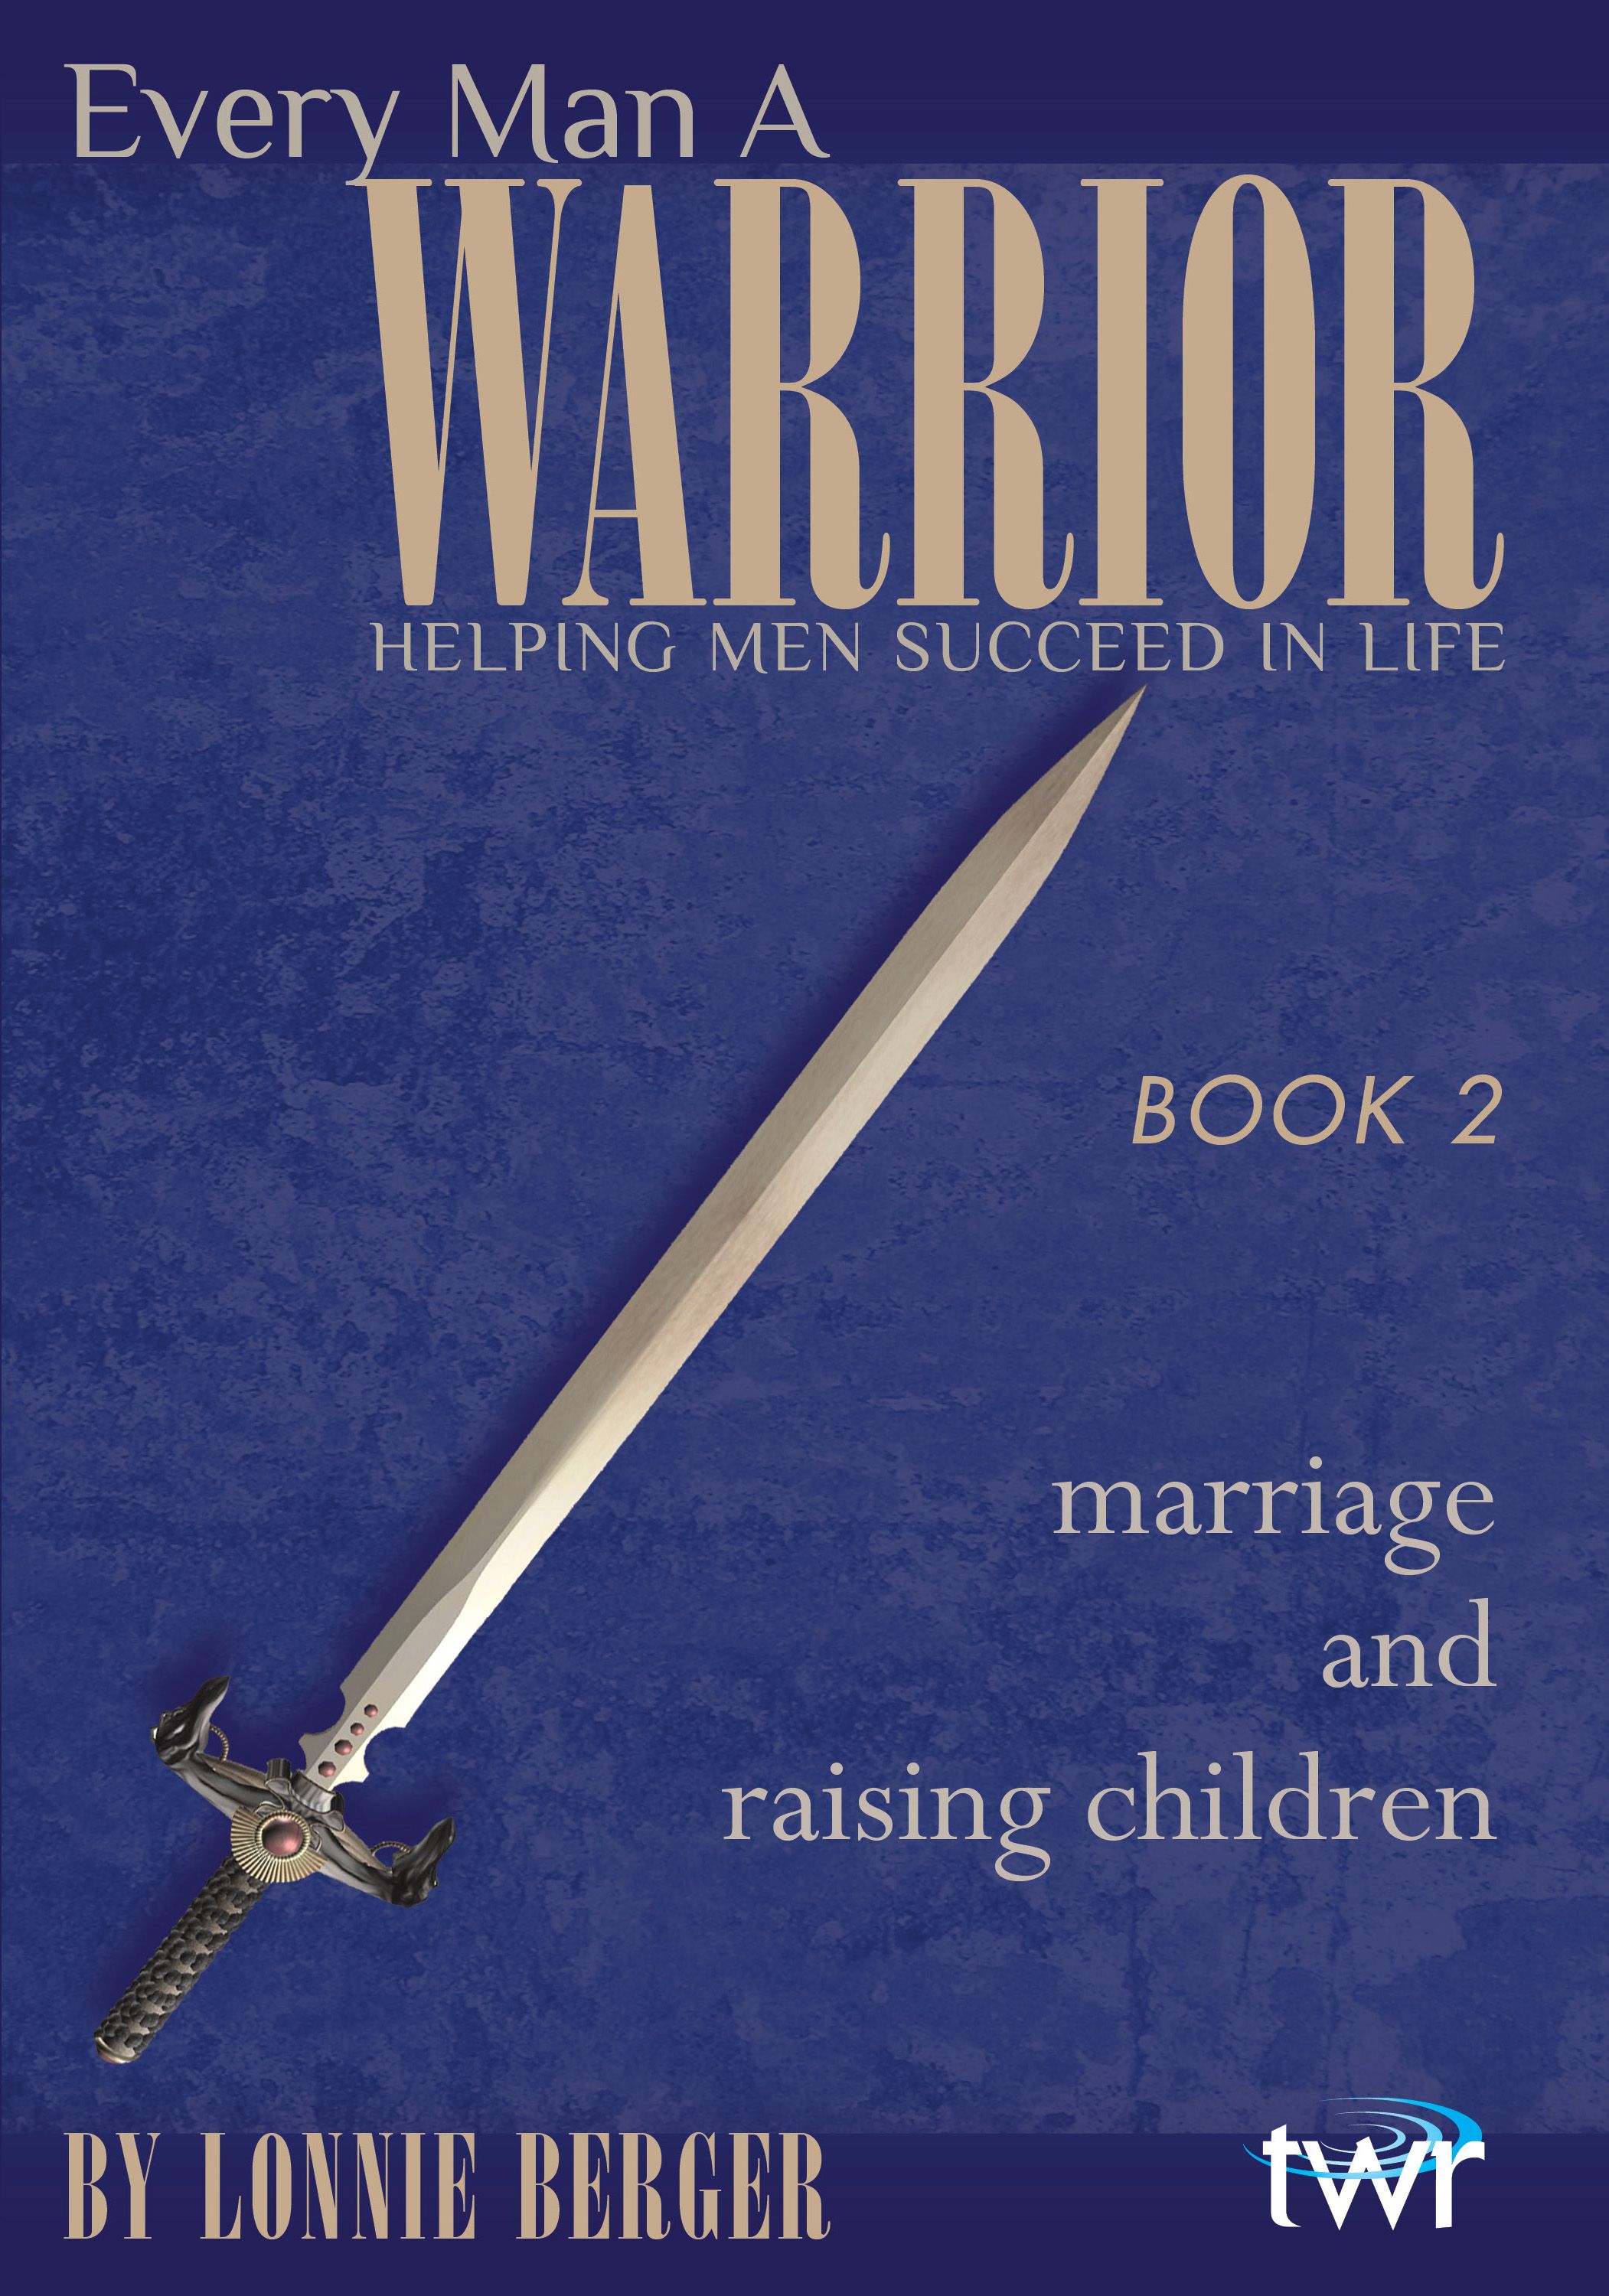 Book 2: Marriage and Raising Children